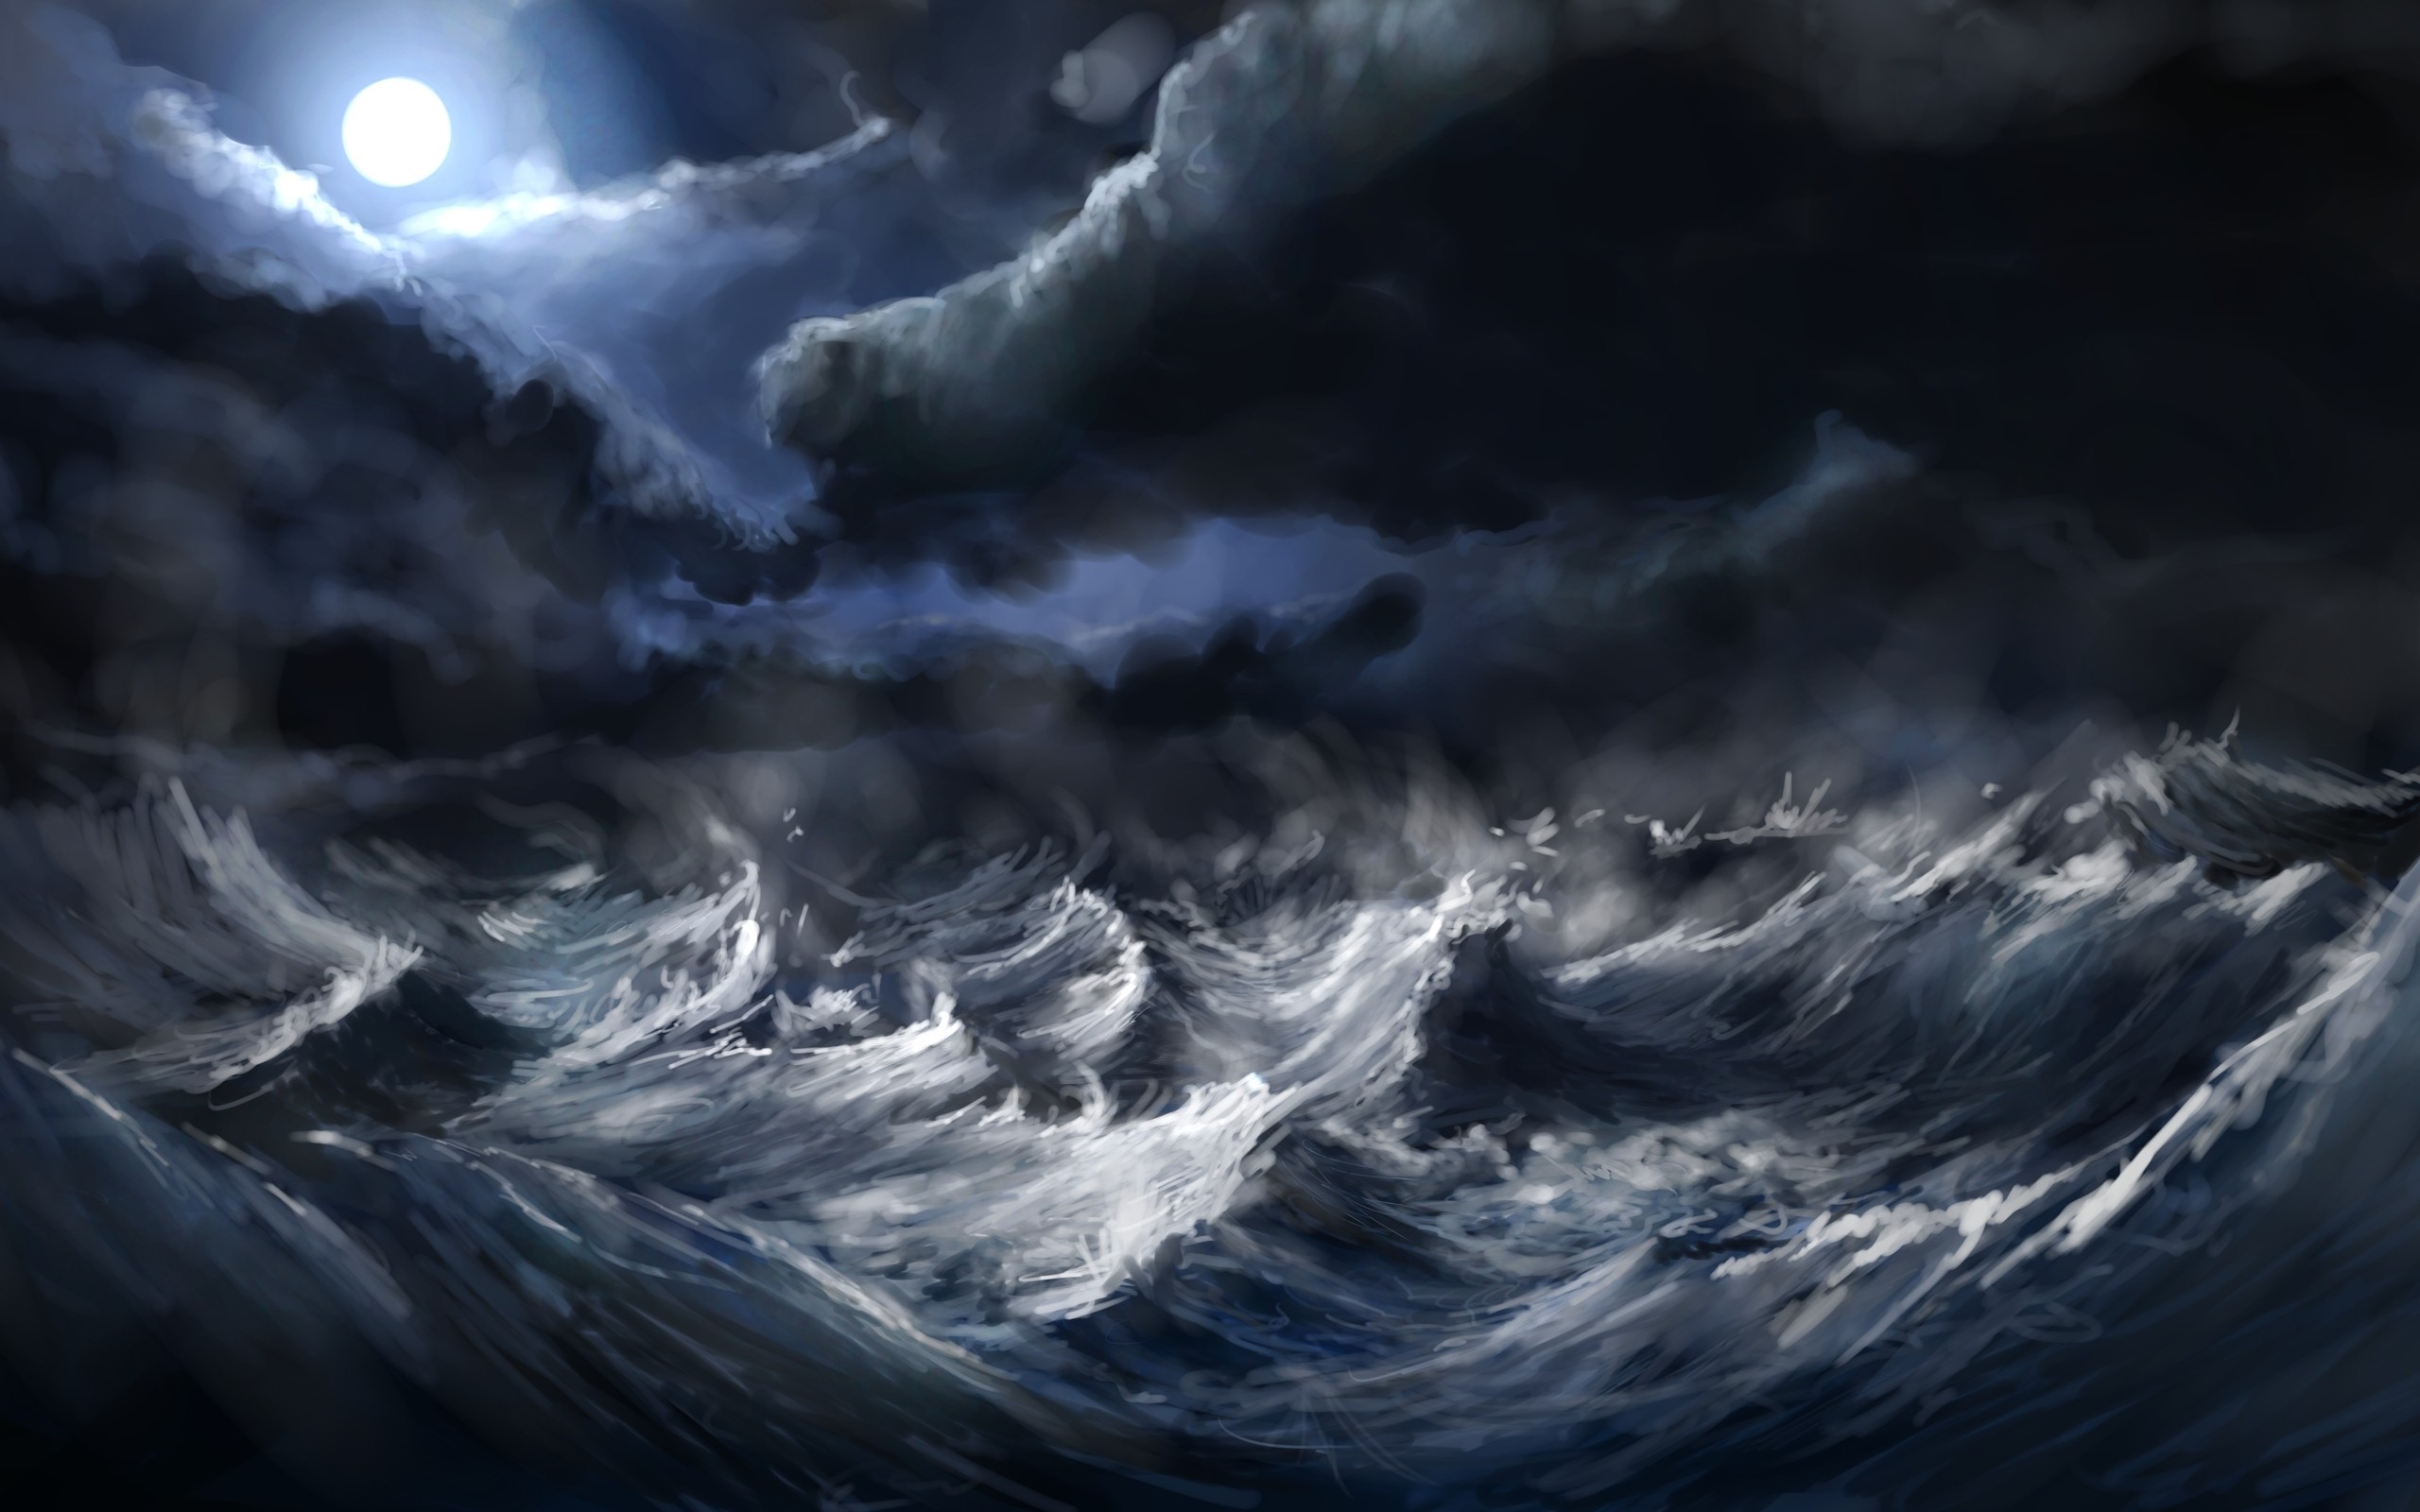 Digital Art Nature Landscape Clouds Sea Waves Storm Moon Moon Rays Painting Artwork Alex Linde Devia 2560x1600